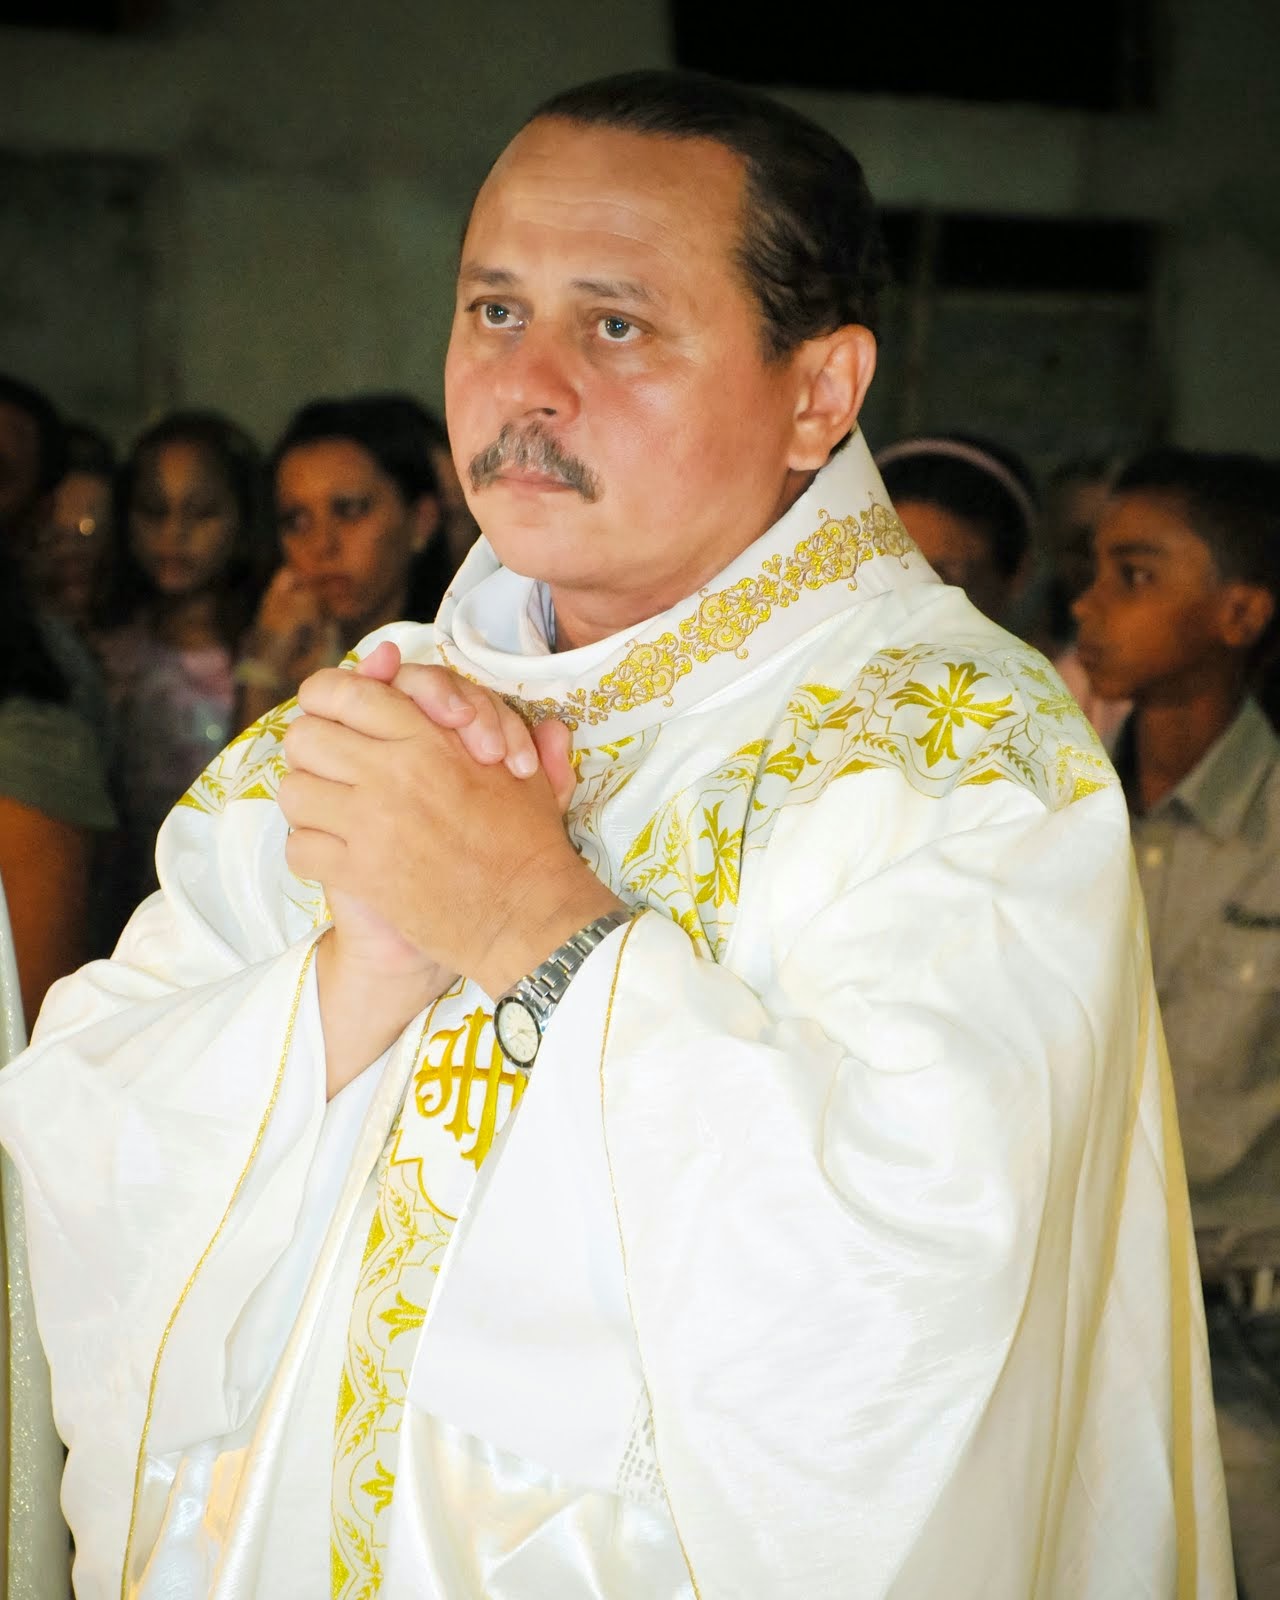 Padre Felipe Gomes